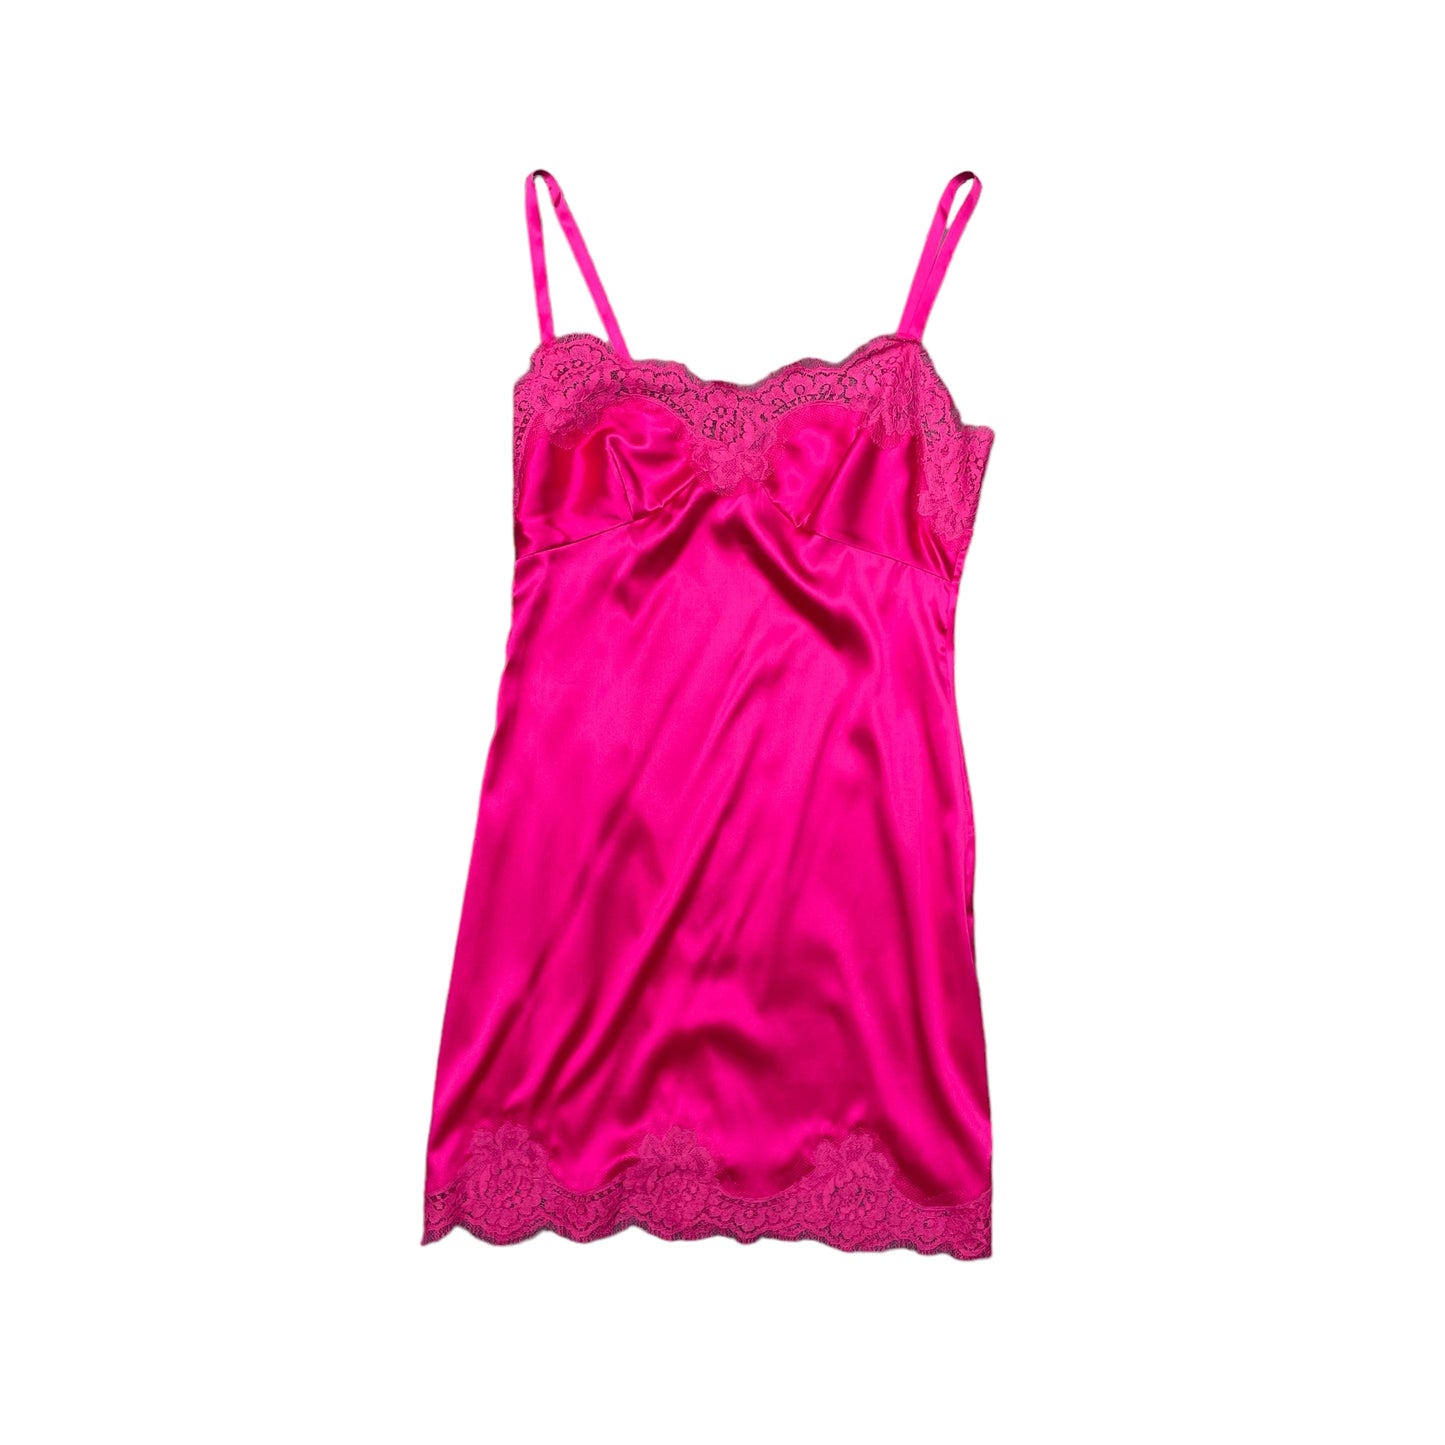 Pink Floral Dress - M